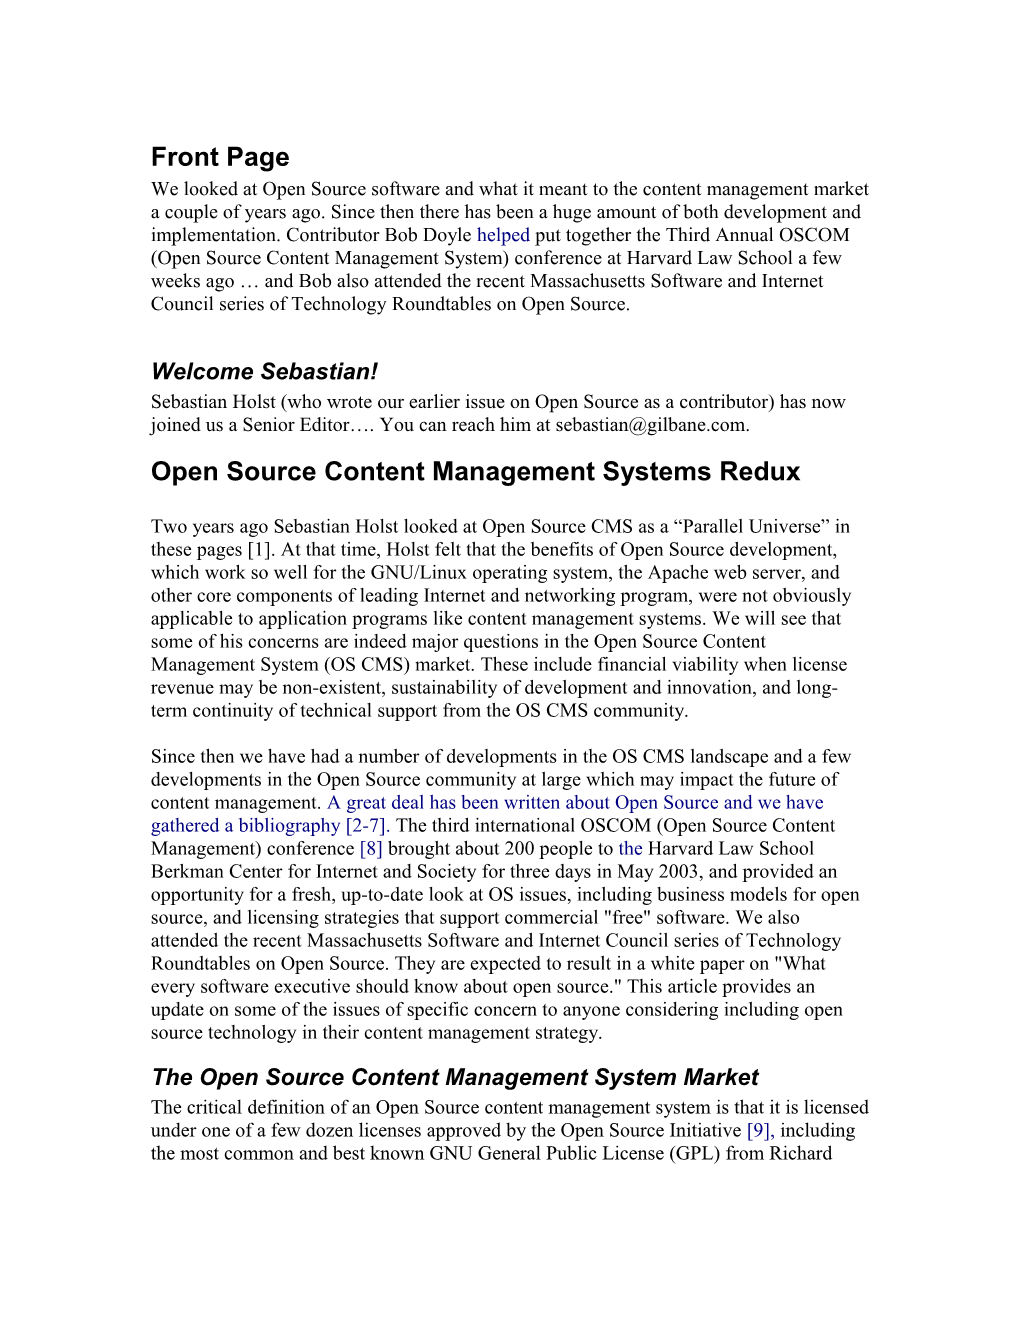 Open Source Content Management Systems Redux